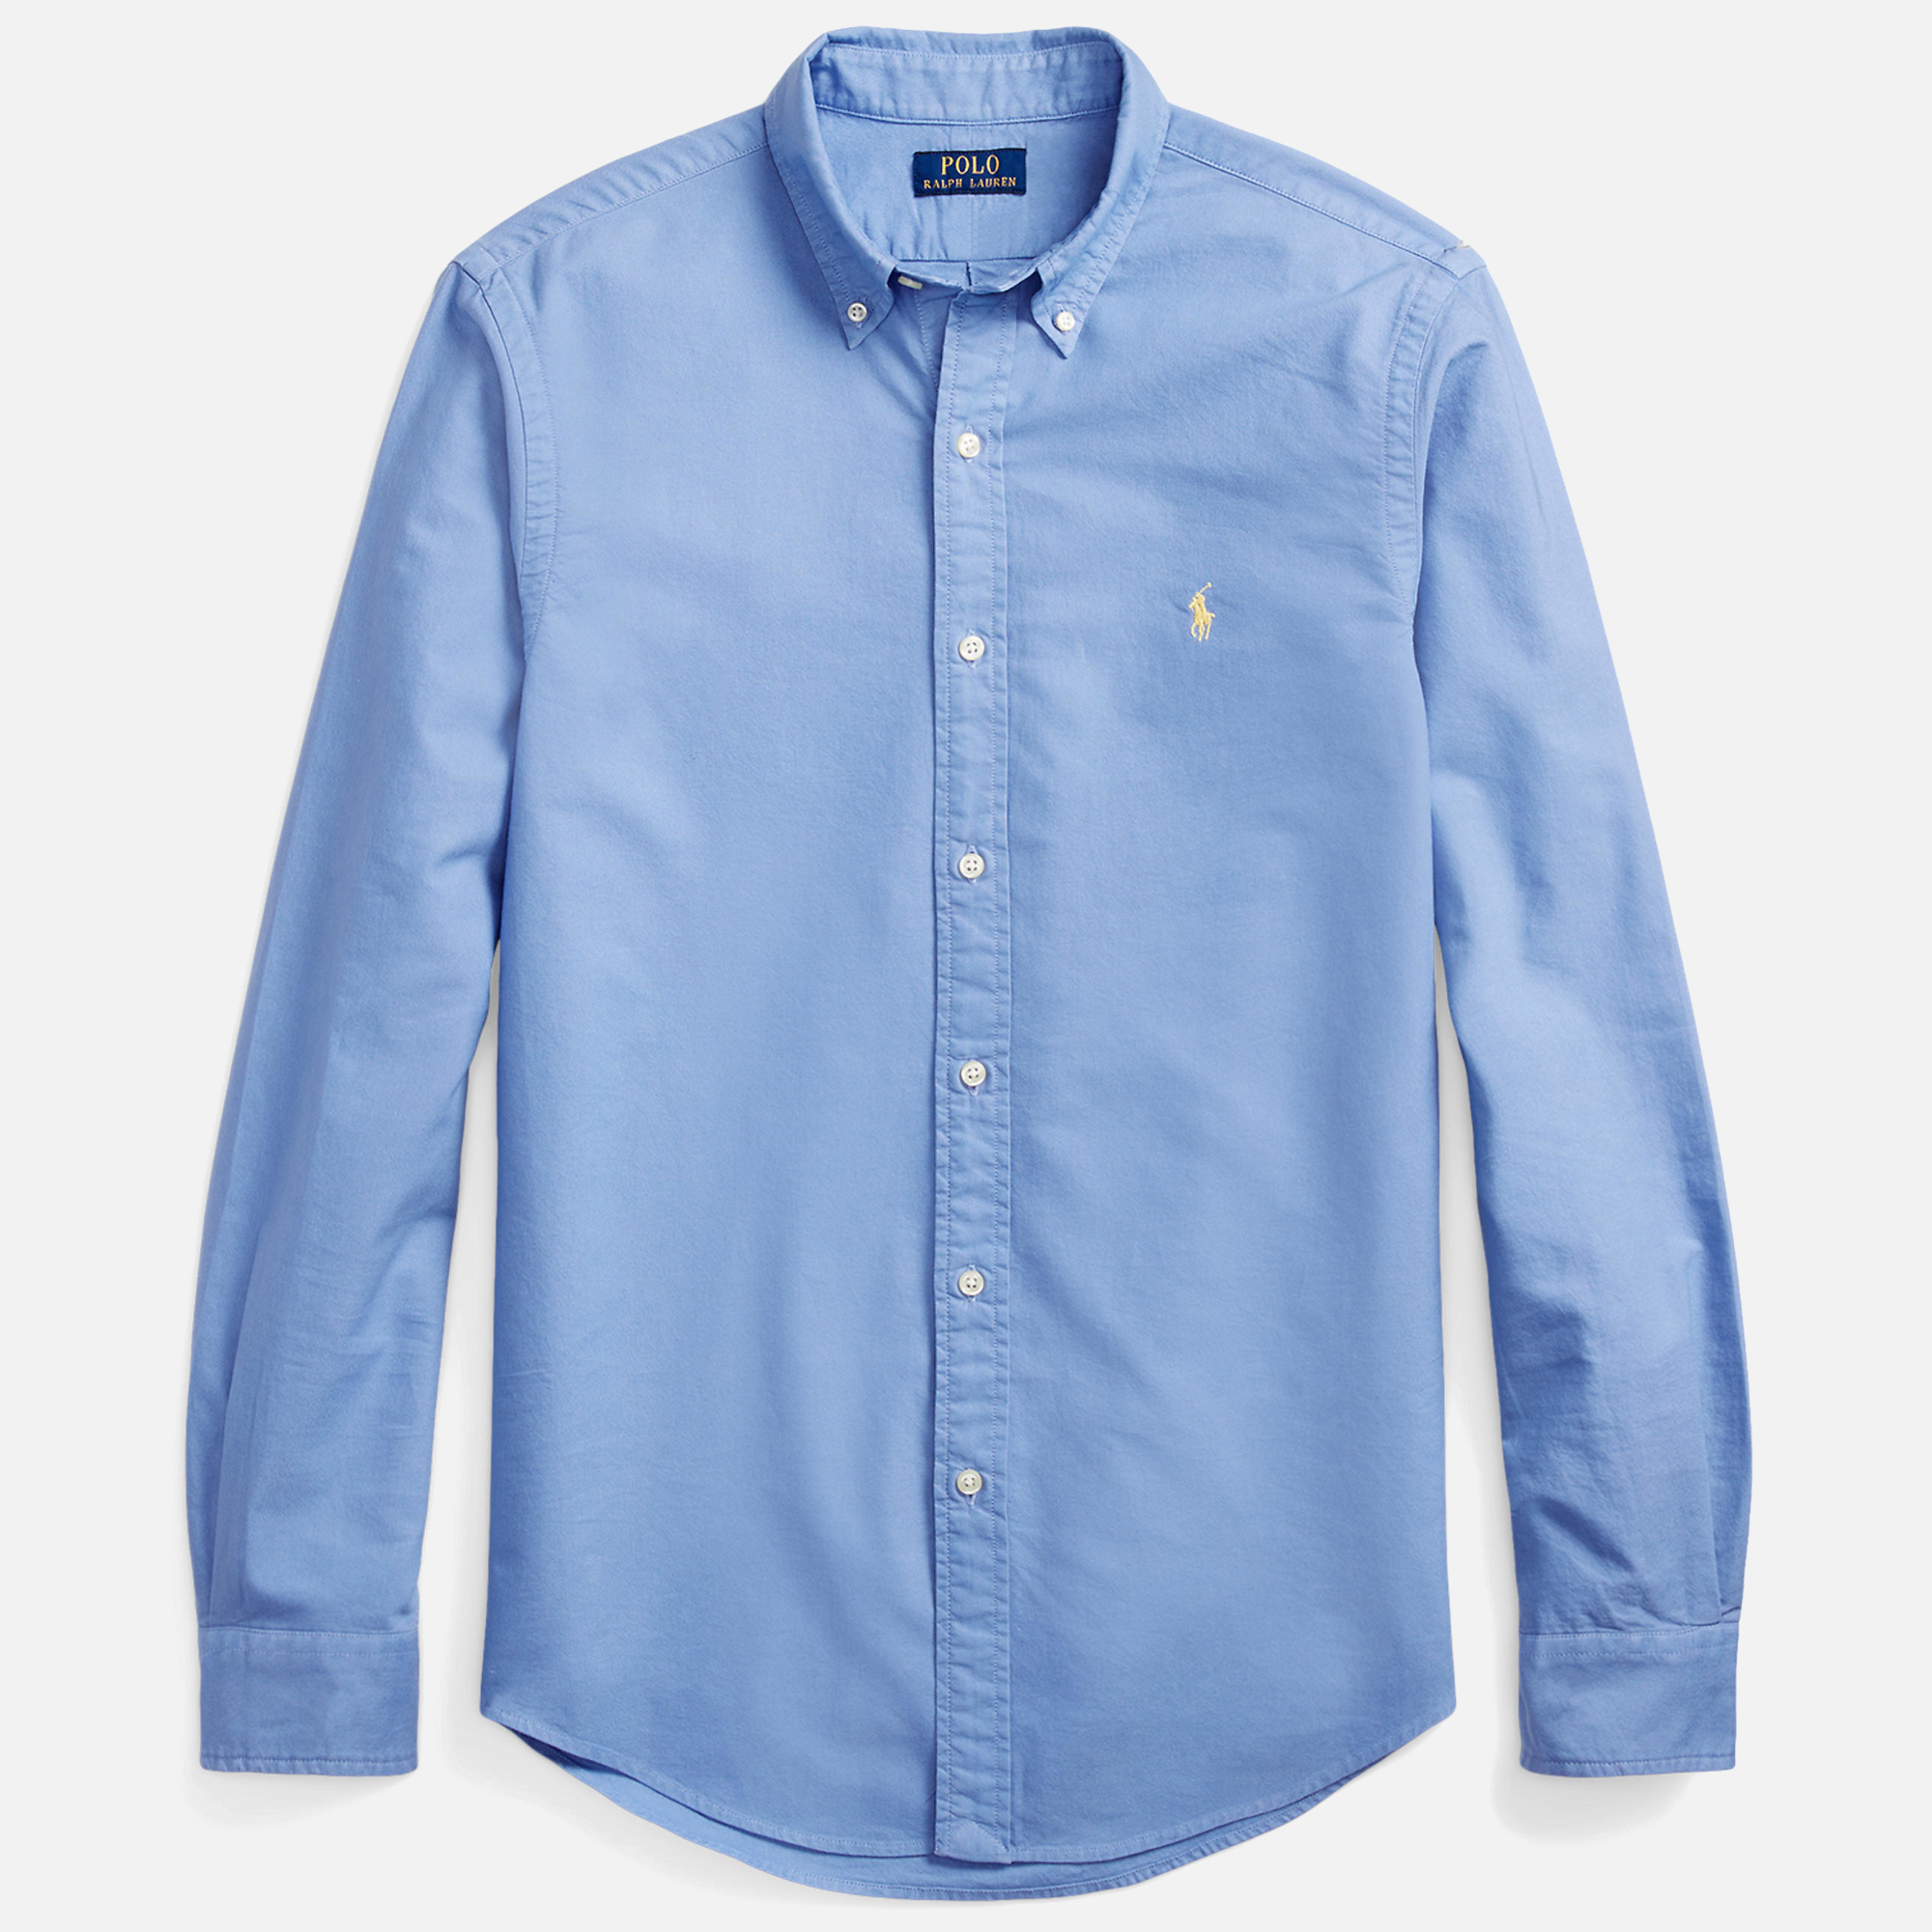 Polo Ralph Lauren CUSTOM FIT OXFORD SHIRT - Shirt - blue - Zalando